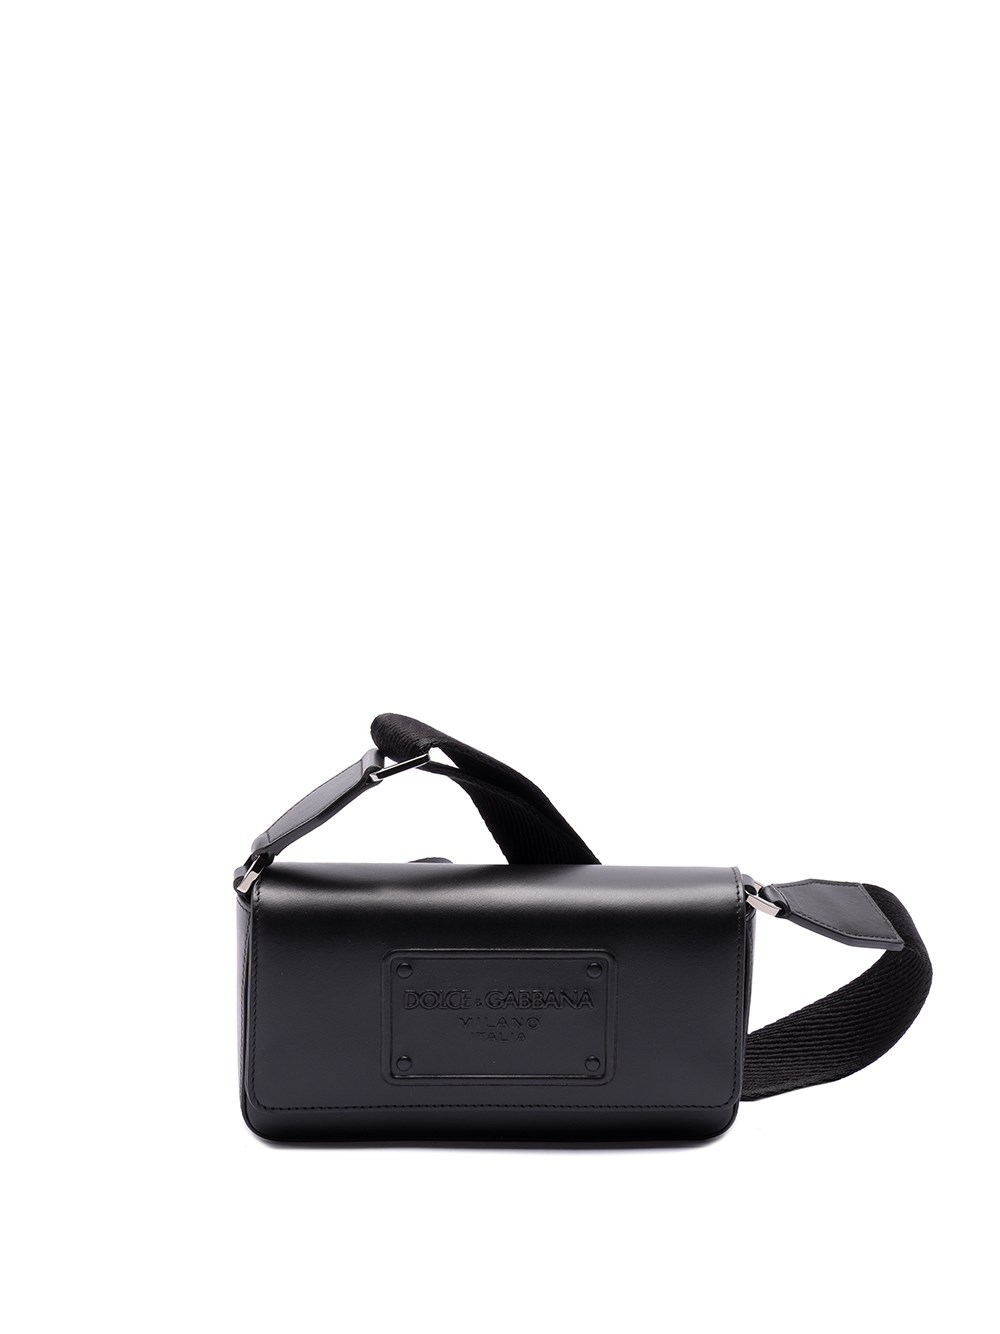 Dolce & Gabbana Embossed Plaque Mini Bag In Black  